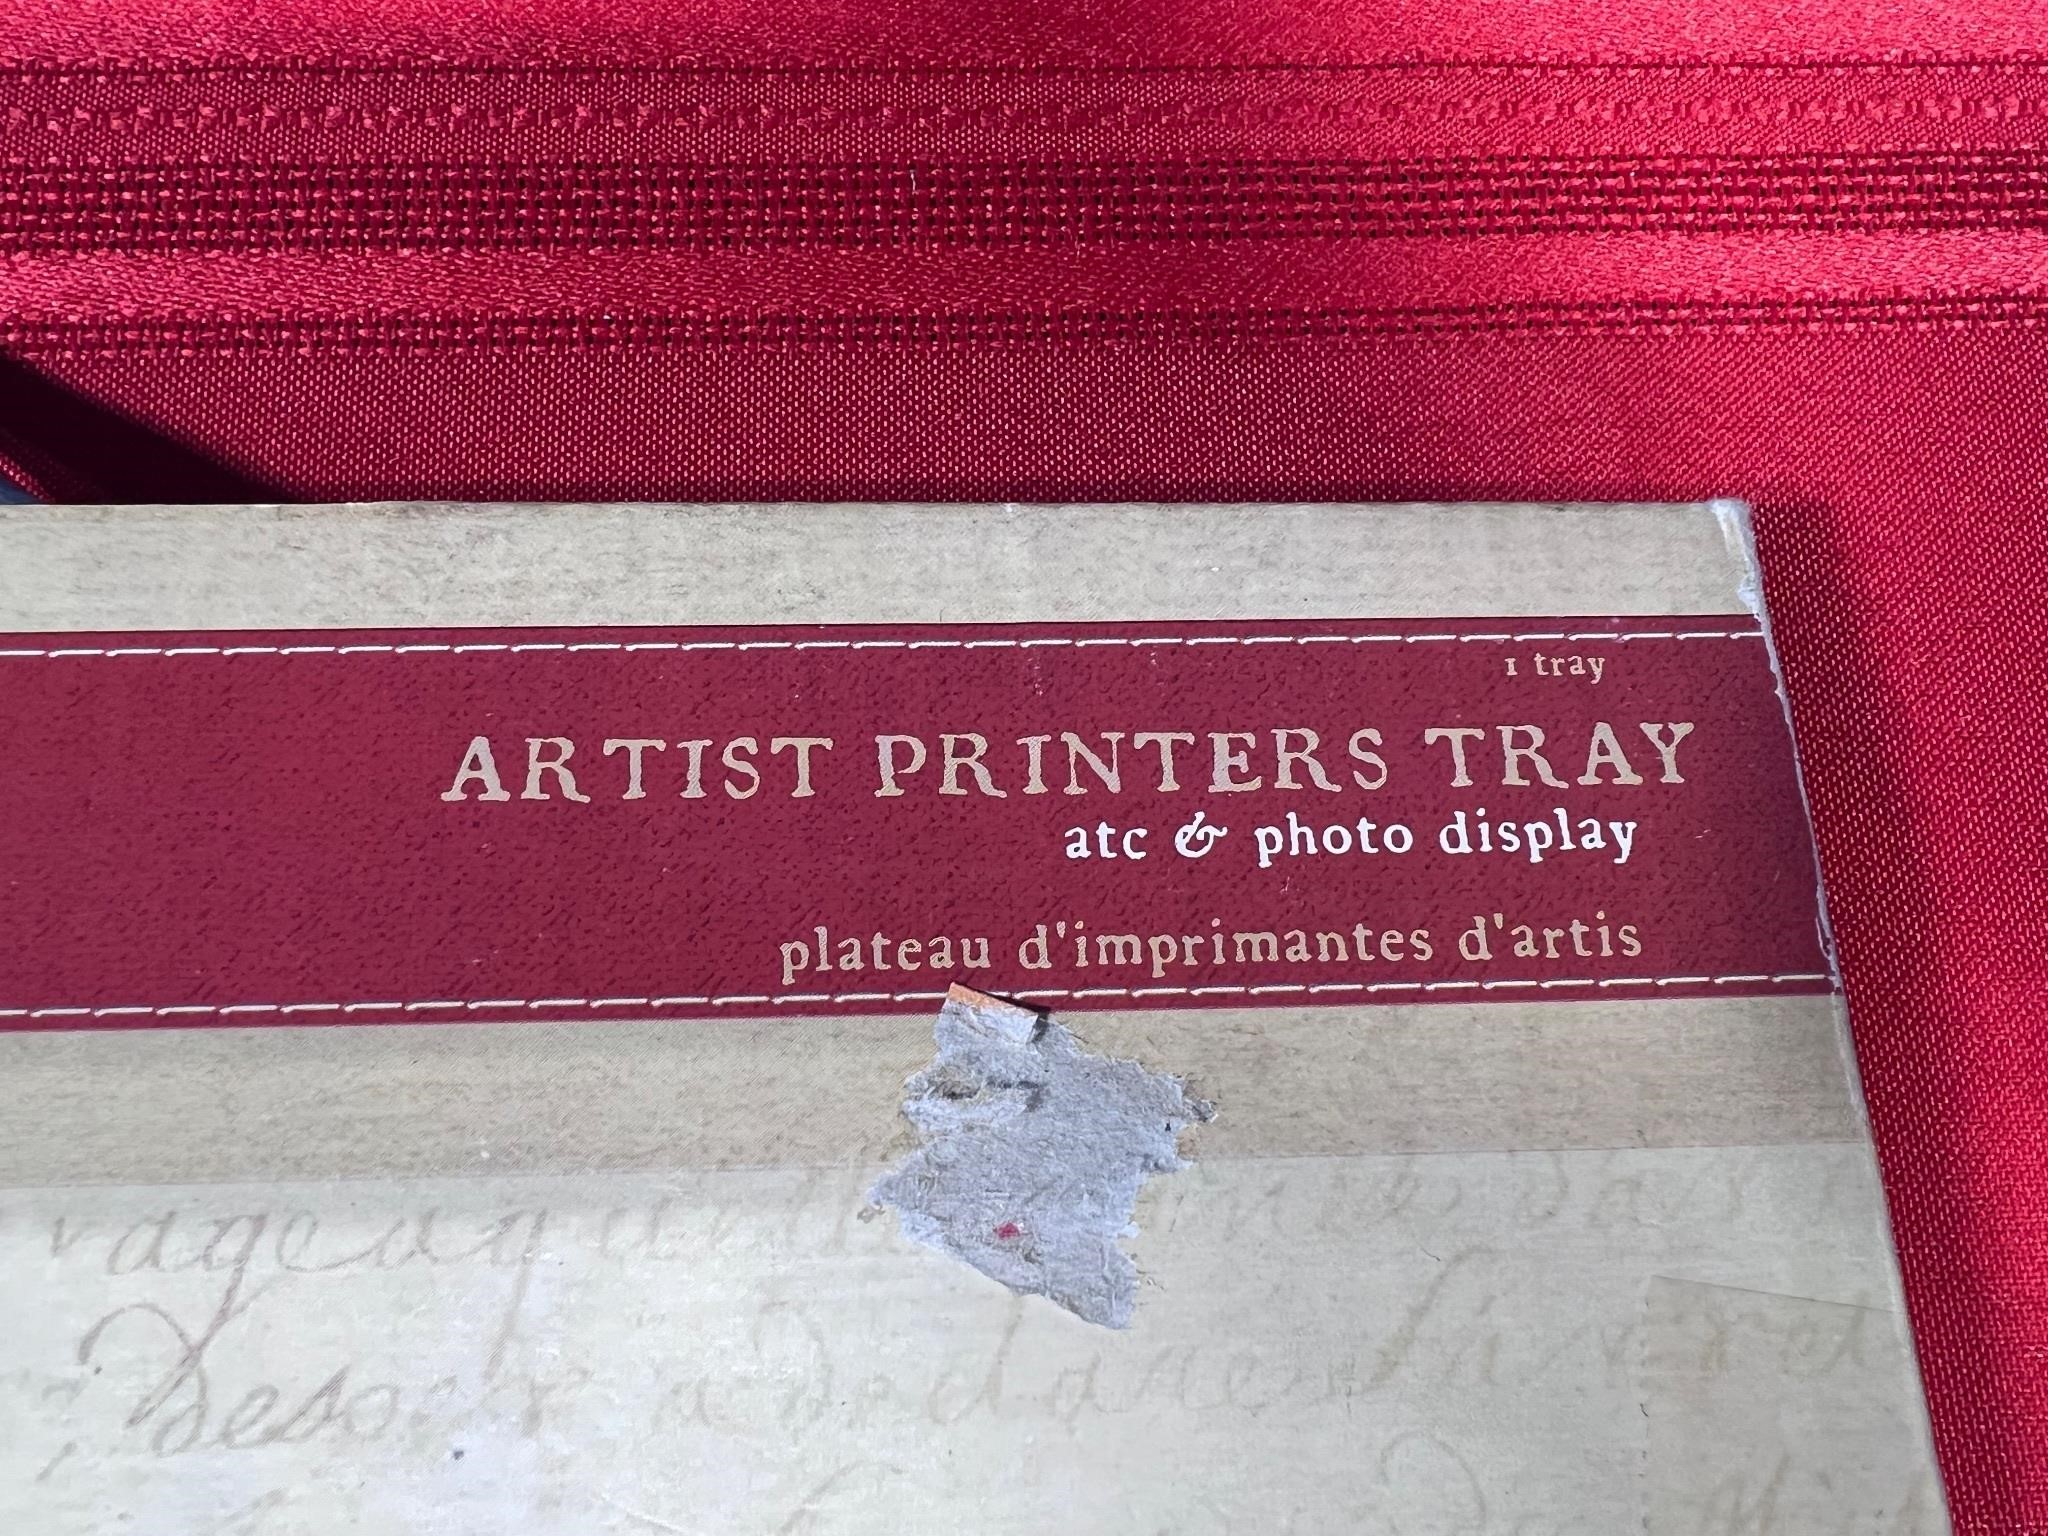 One Artist Printers Tray